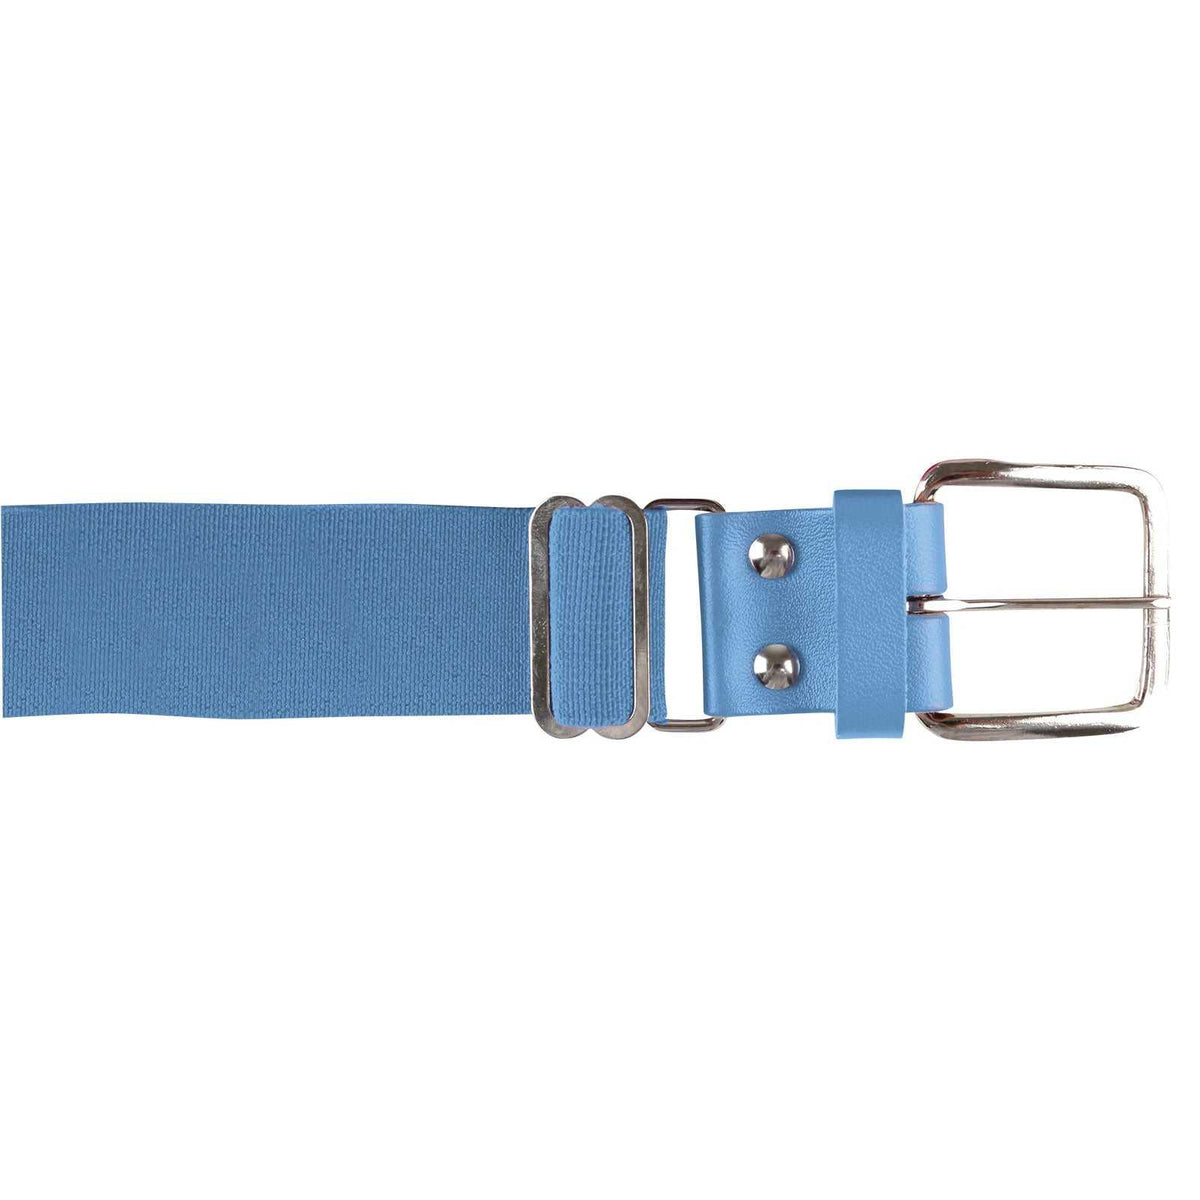 Champro A060 Brute Baseball Belt Leather Tab (6 pk) - Columbia Blue - HIT a Double